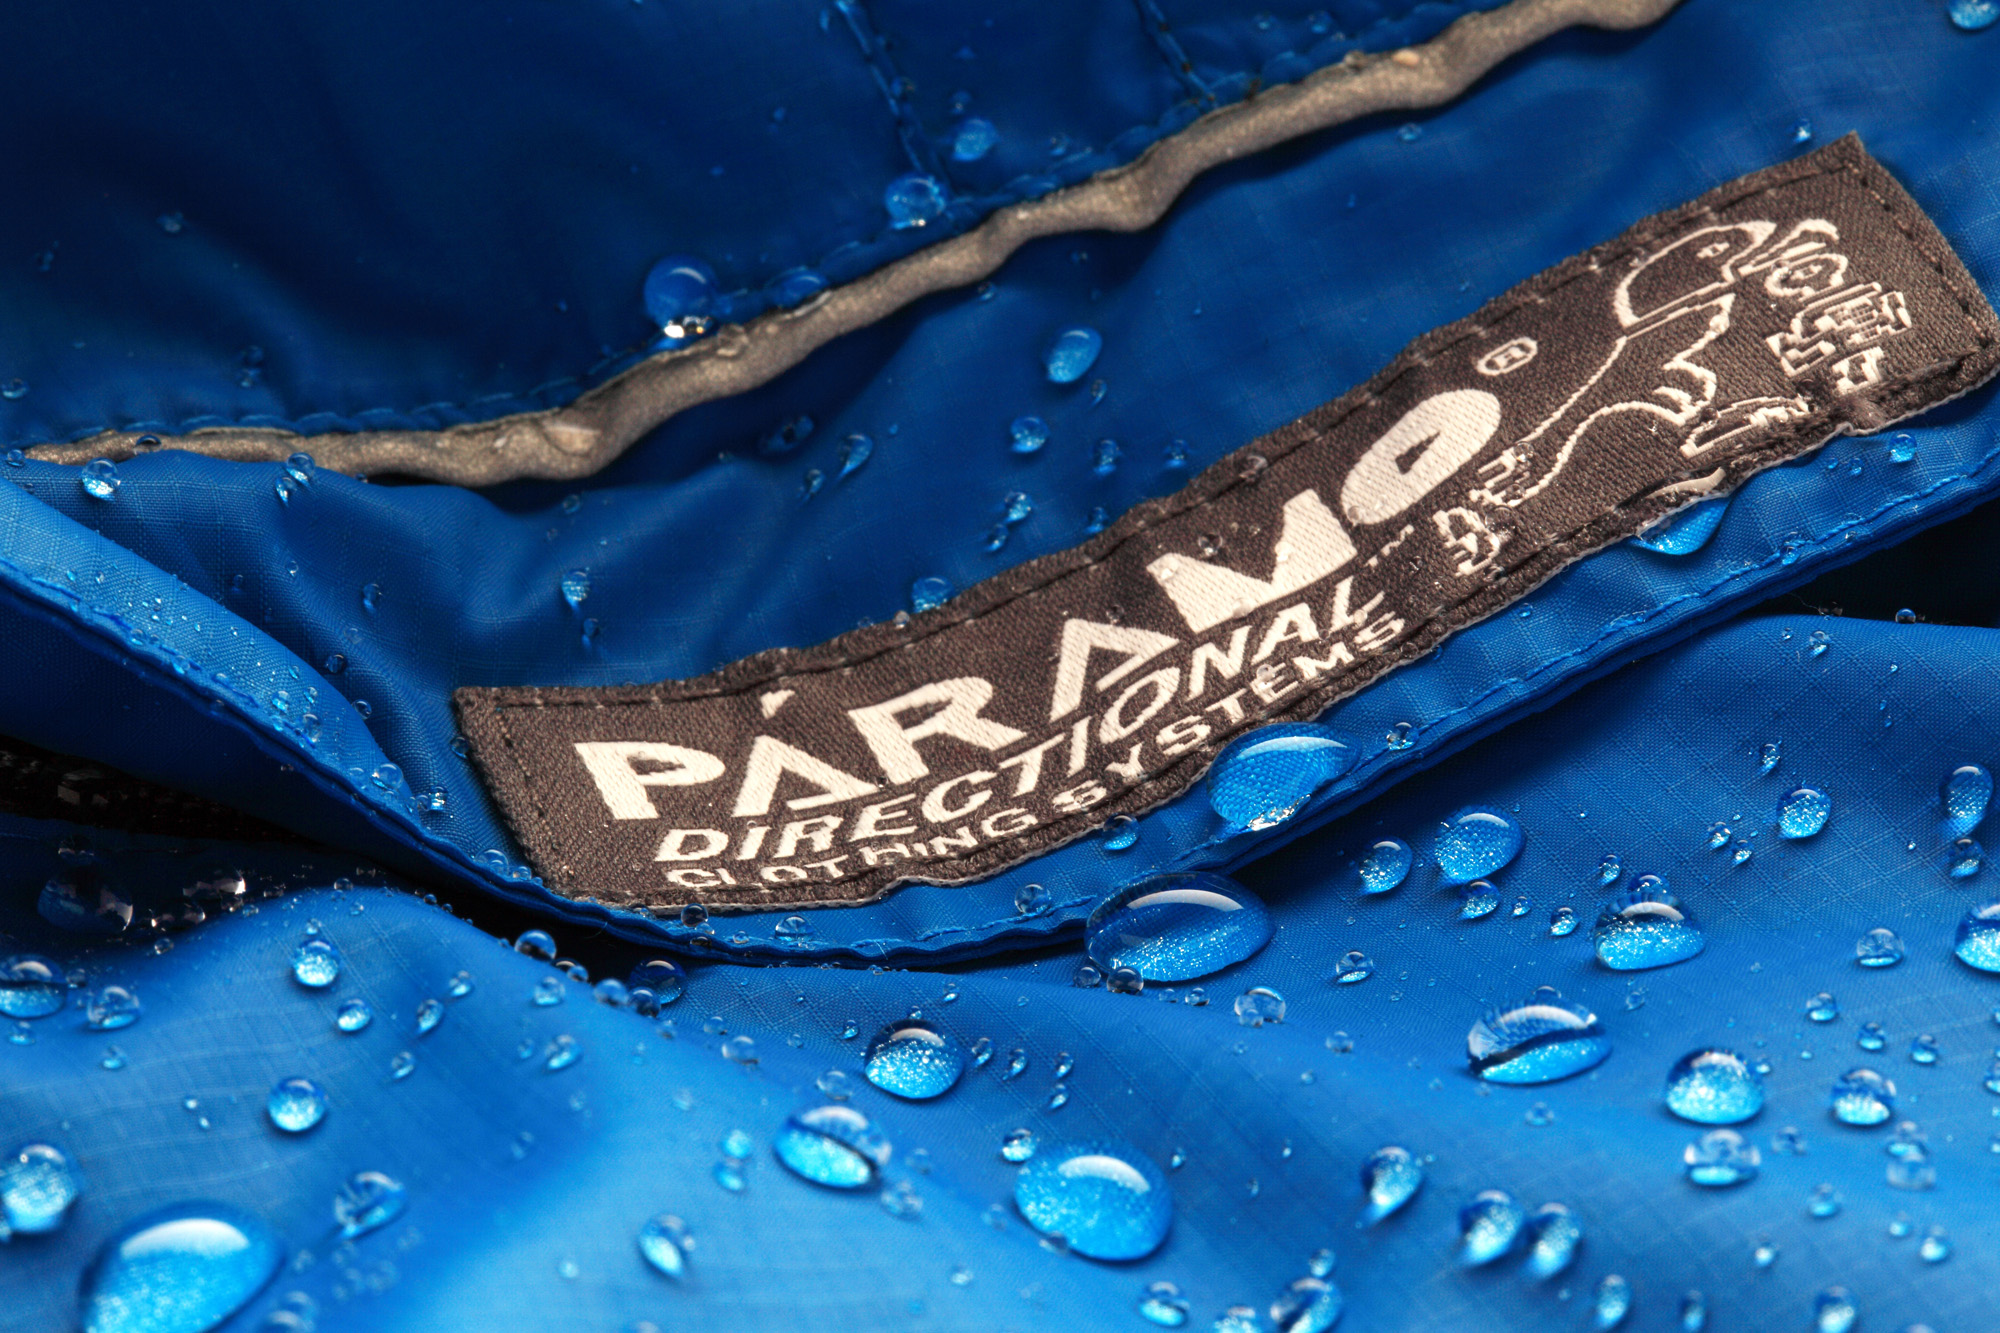 Páramo garments use the Nikwax Analogy waterproof fabric system